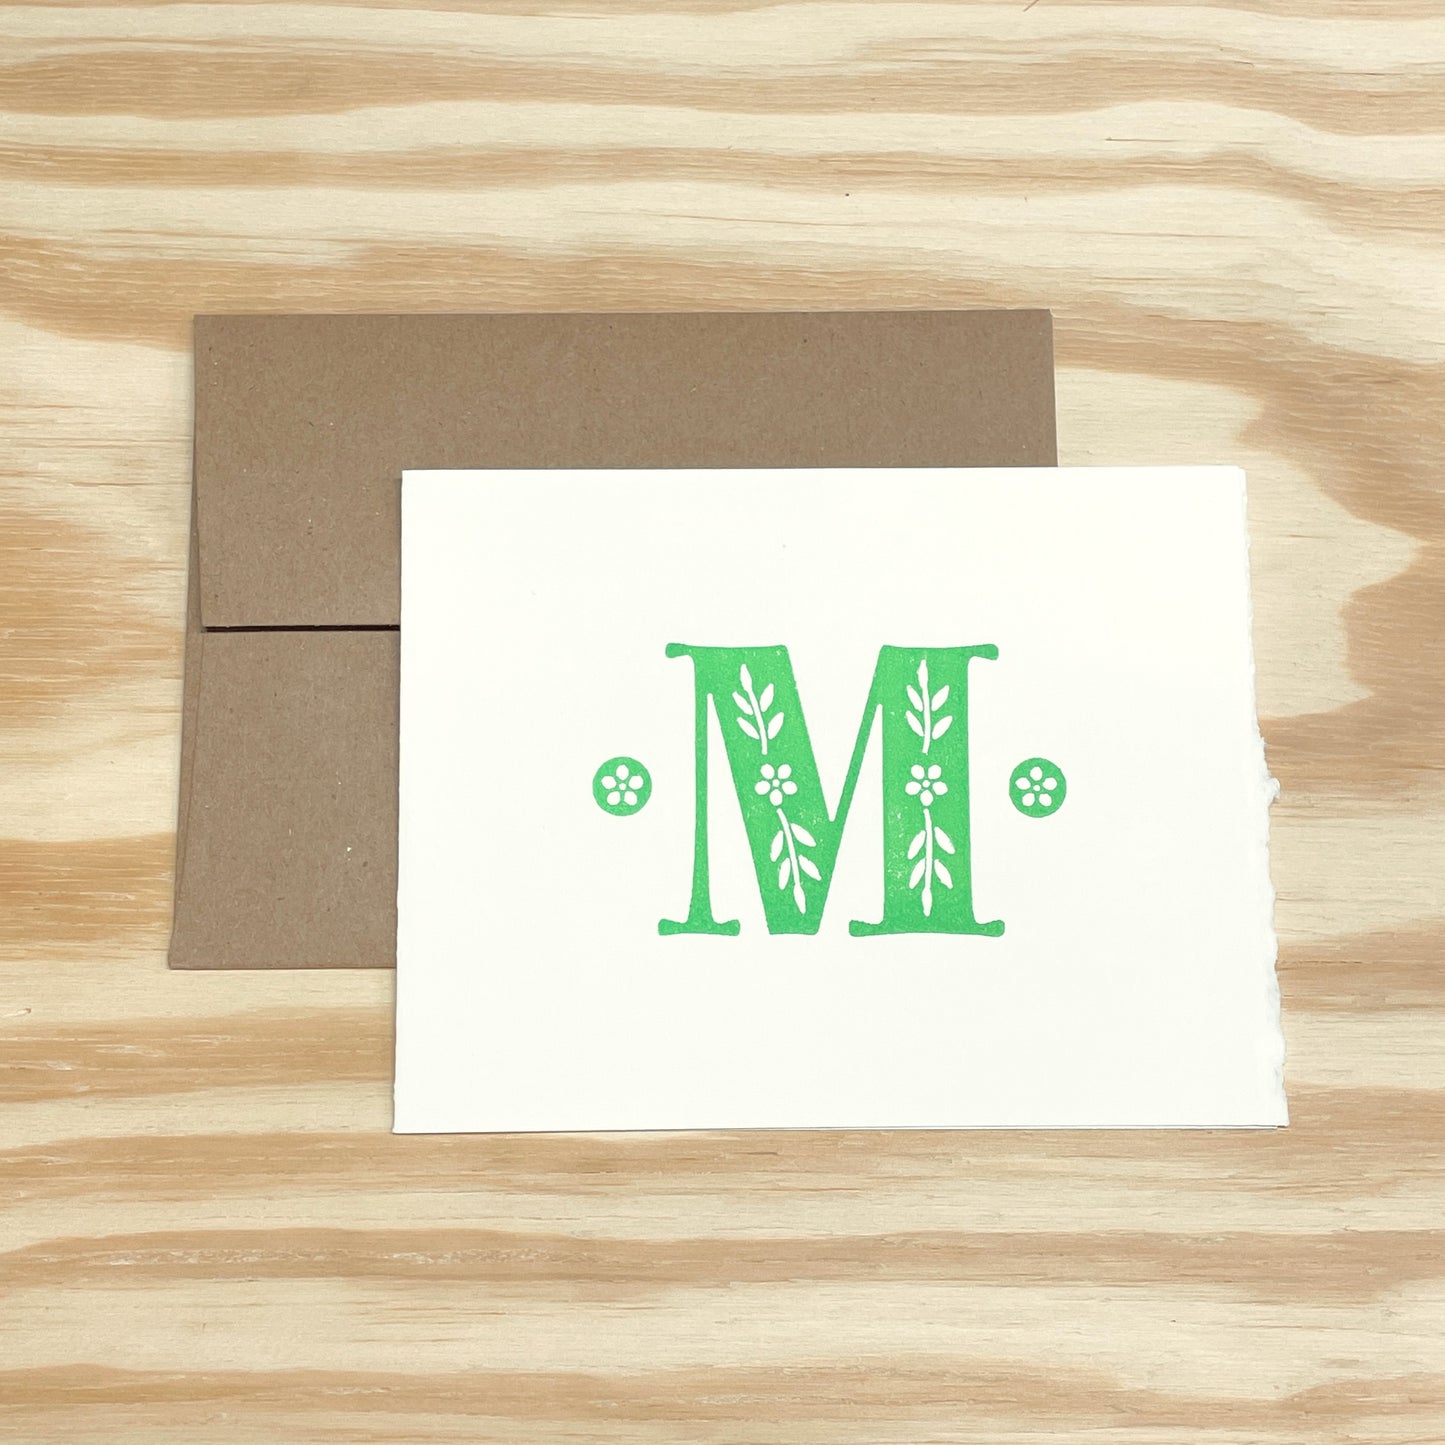 Monogram Leafy Letters SINGLE card - Choose Your Letter - wood type letterpress printed